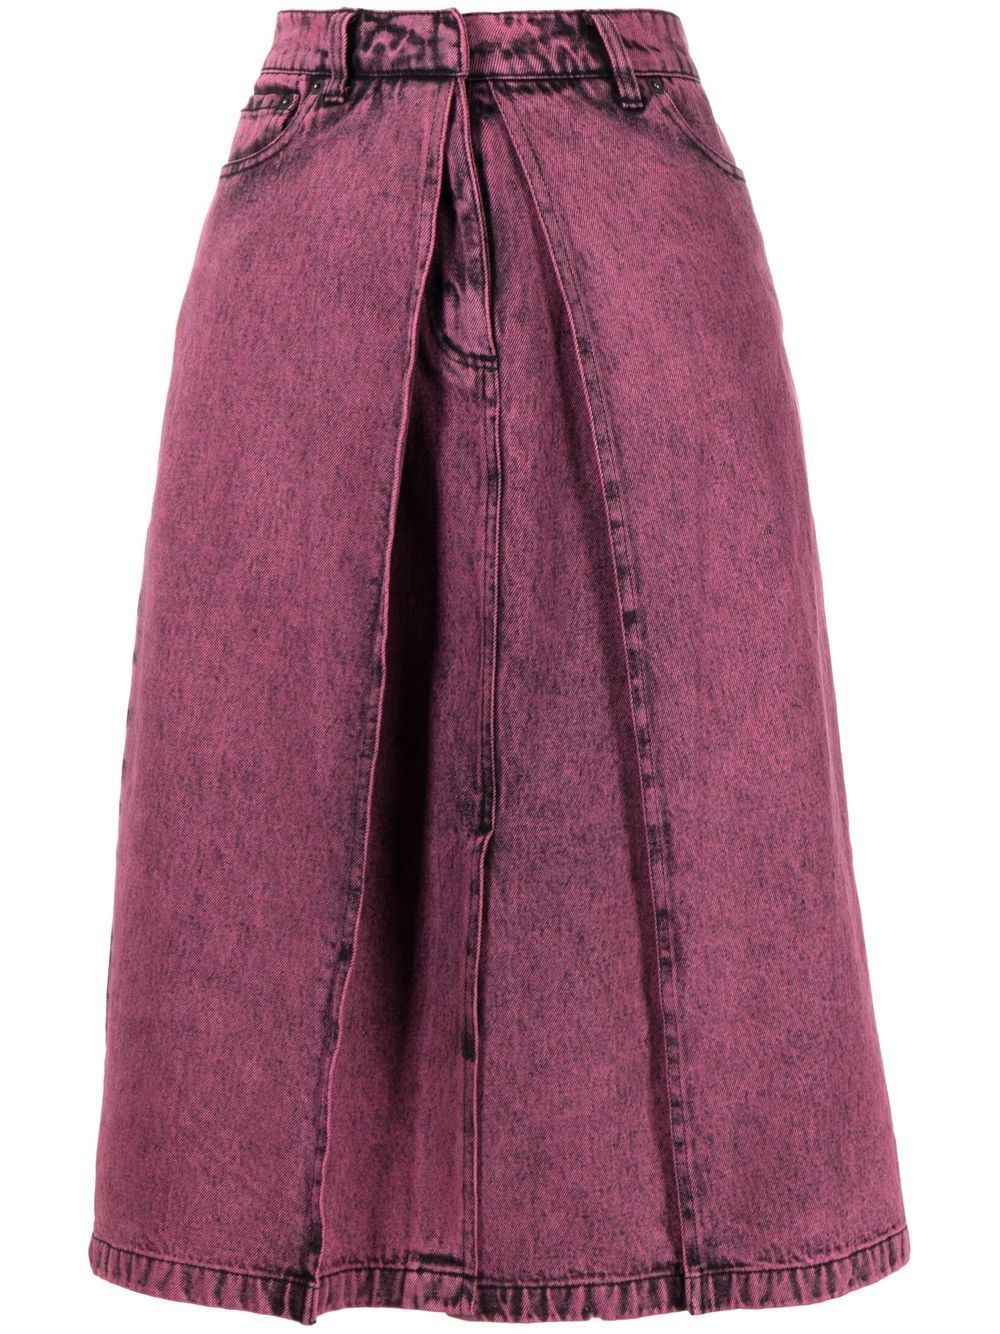 3.1 Phillip Lim / フィリップ リム Overdyed Denim Pleated Skirt In Pink